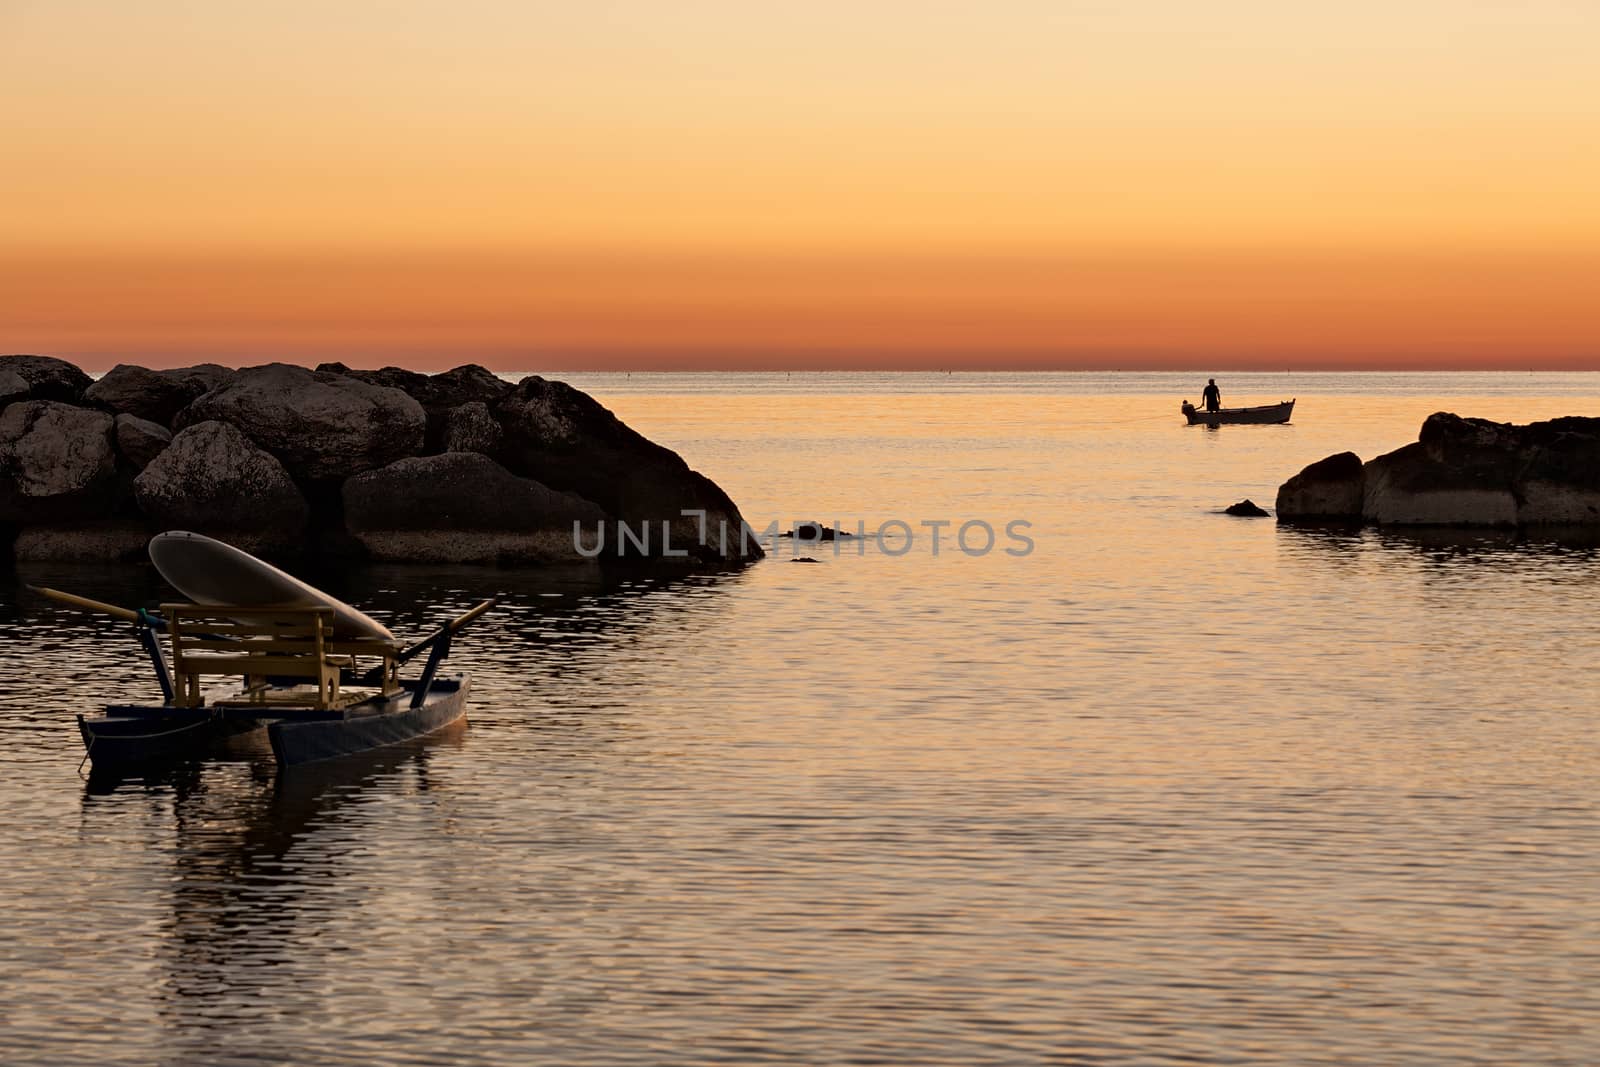 Fisherman in the early morning dawn by LuigiMorbidelli